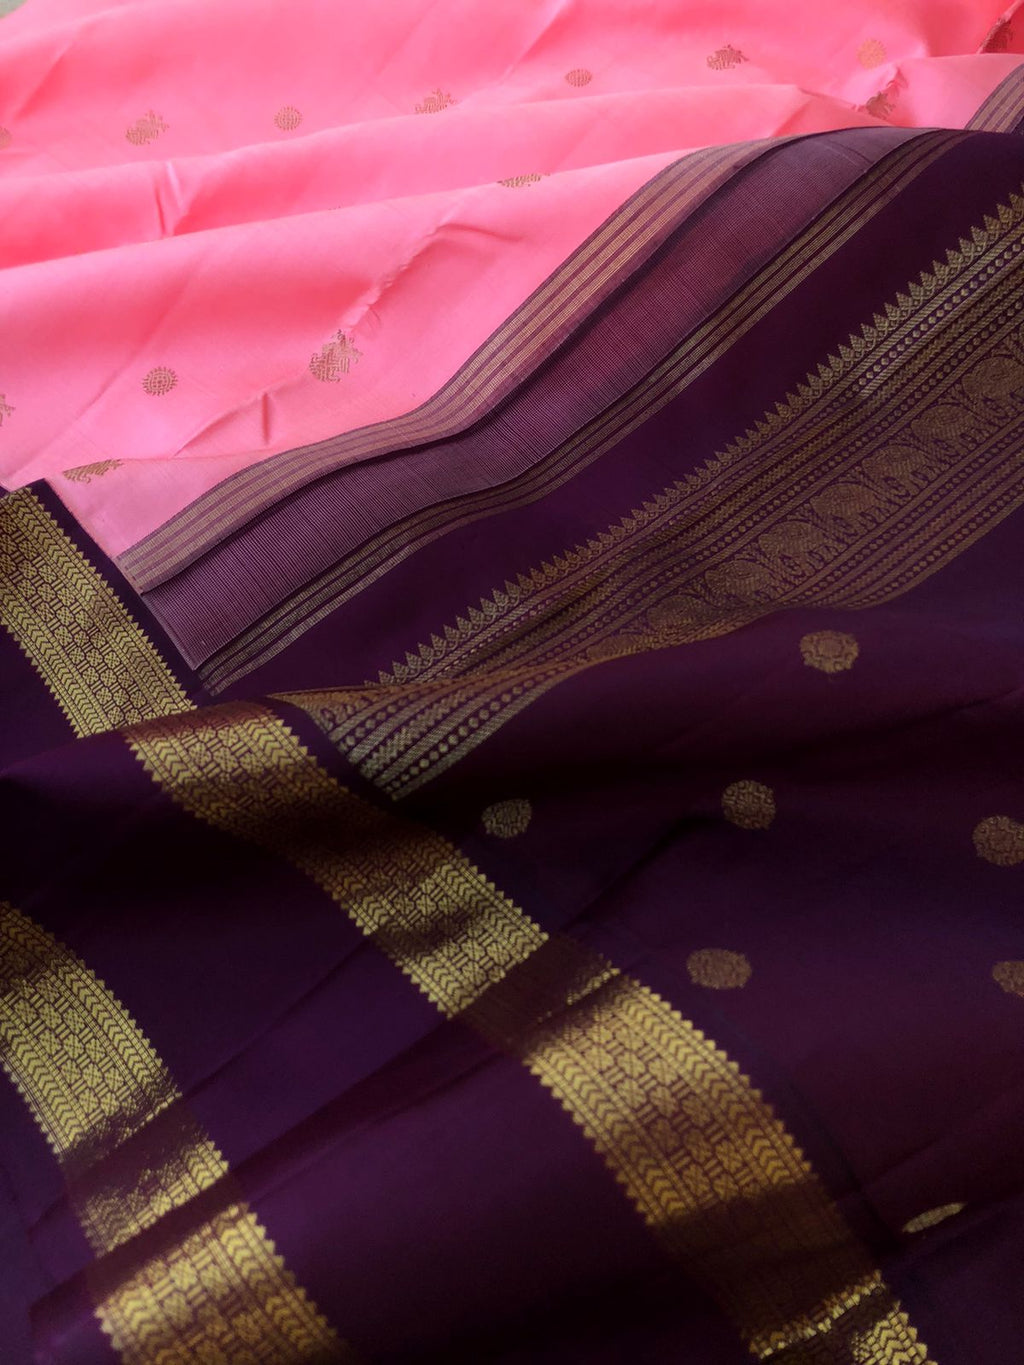 Meenakshi Kalayanam - Authentic Korvai Kanchivarams - unusual baby pink and beetle nut purple with retta pett woven borders